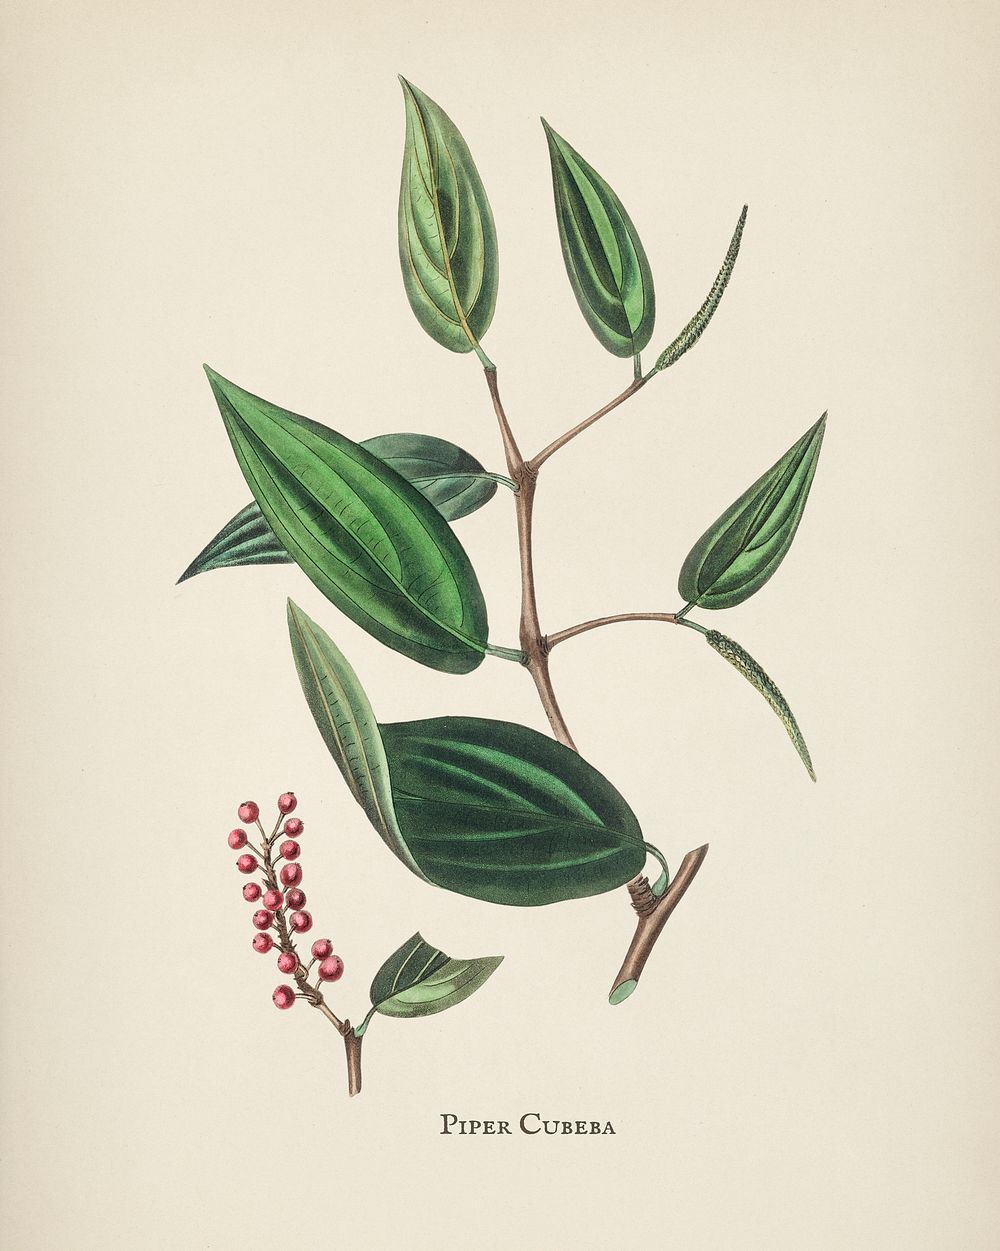 Piper cubeba illustration from Medical Botany (1836) by John Stephenson and James Morss Churchill.